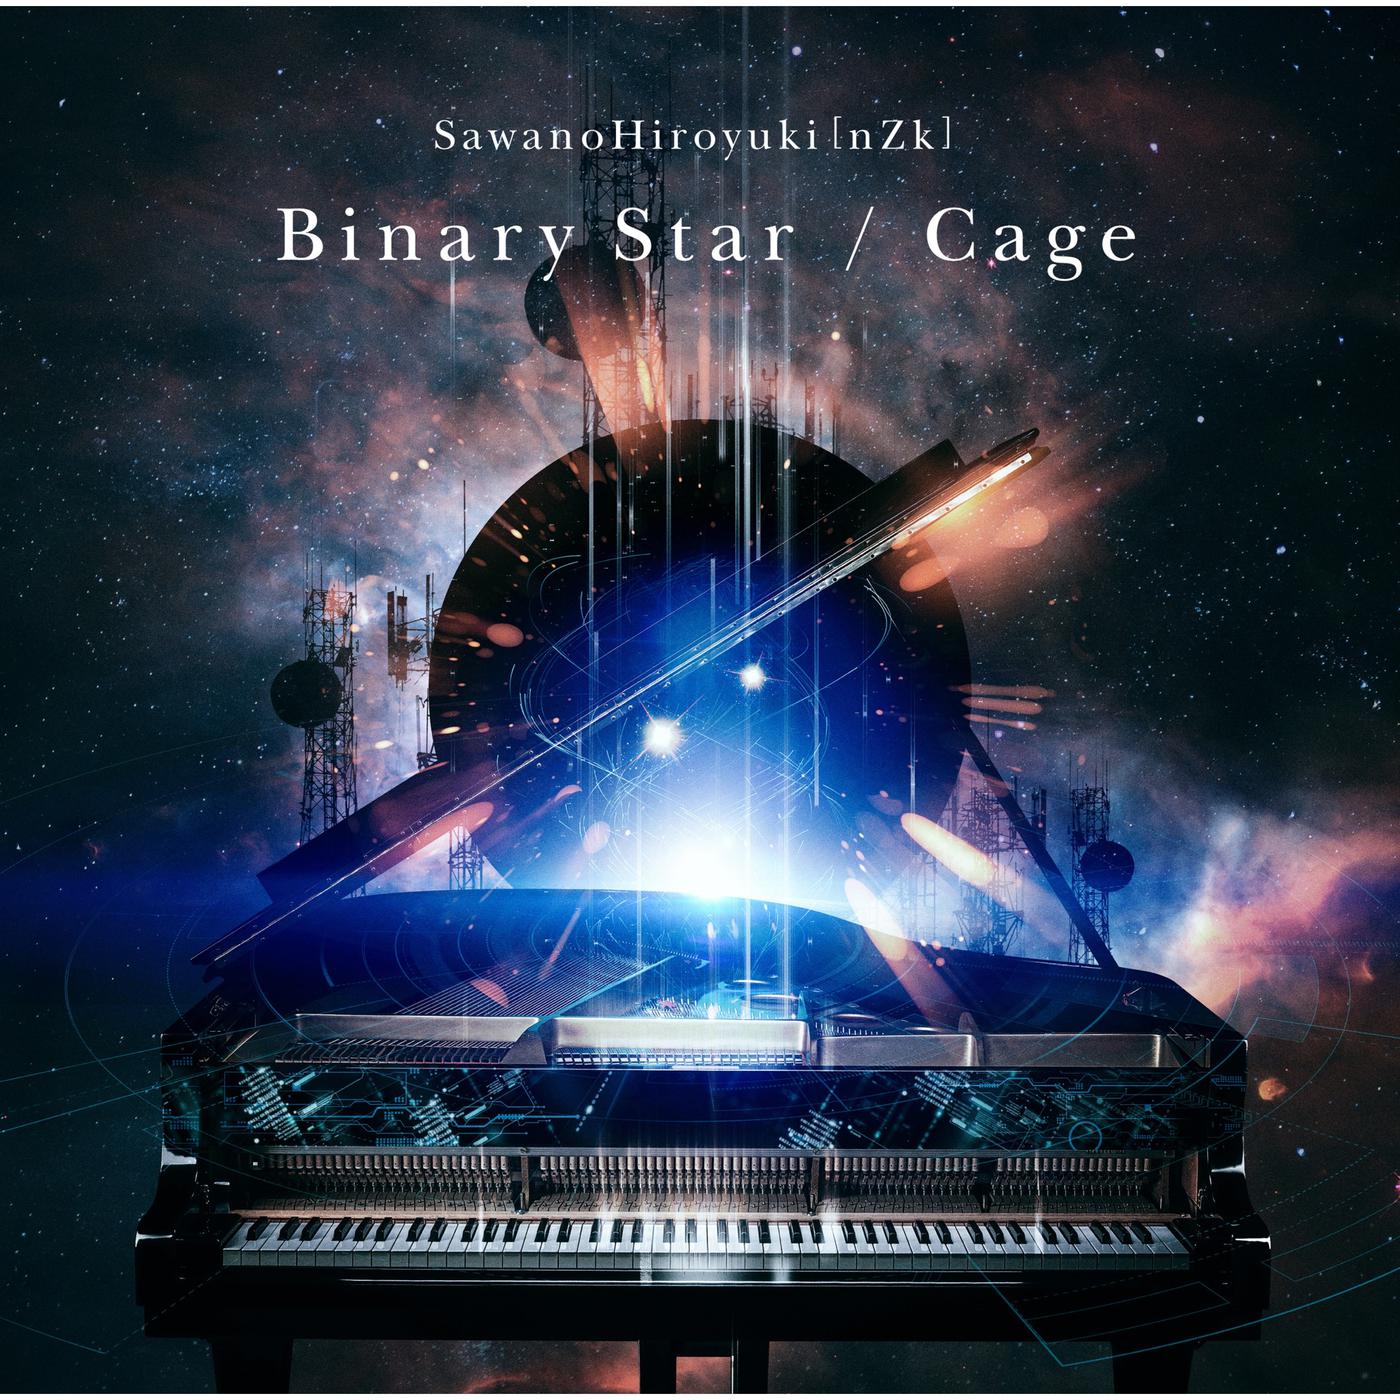 Binary Star歌词 歌手Uru / SawanoHiroyuki[nZk]-专辑Binary Star/Cage-单曲《Binary Star》LRC歌词下载